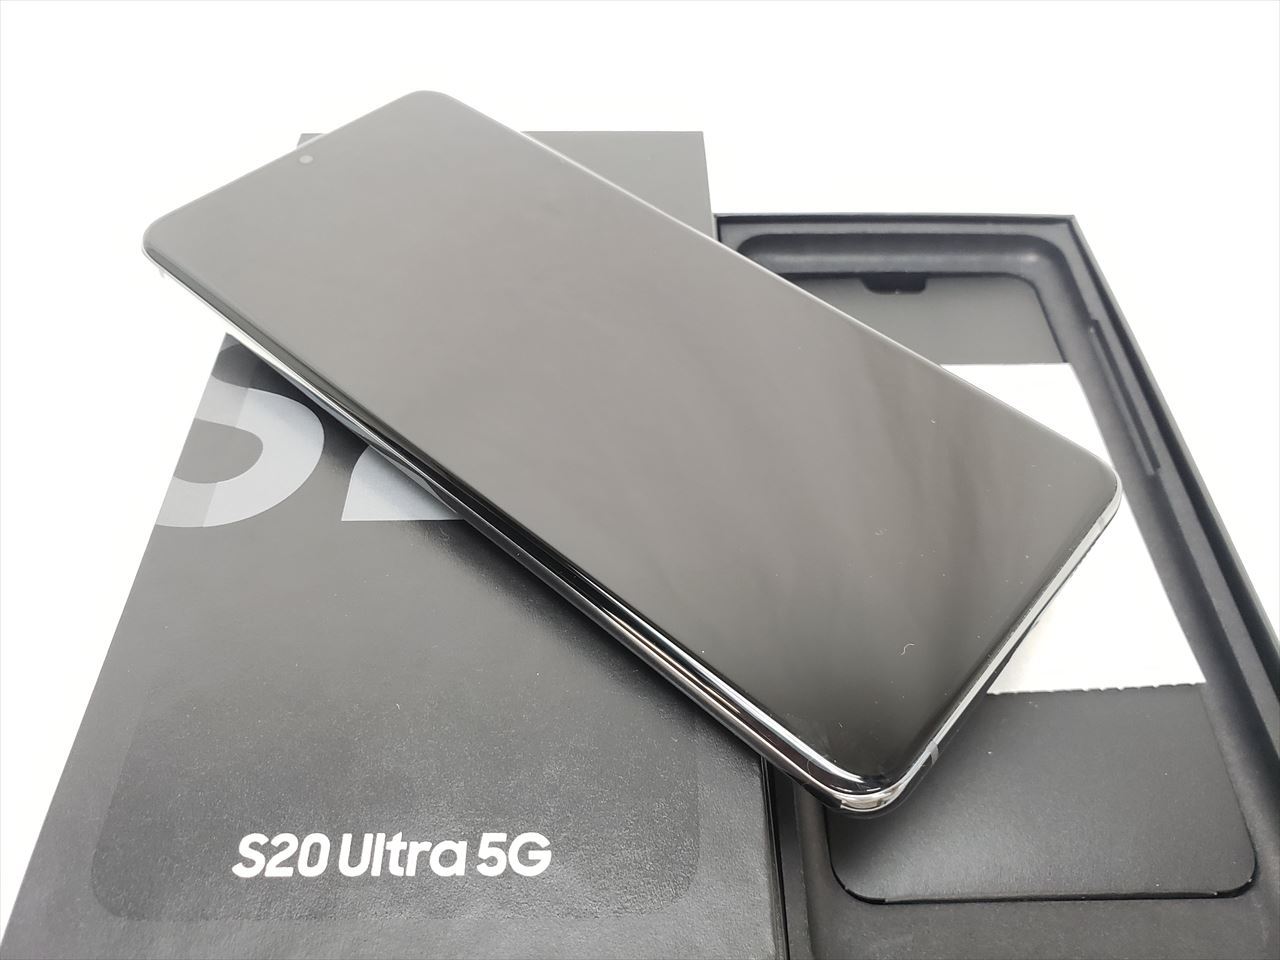 セール中❗未開封品 Galaxy S20 Ultra 限定色ホワイト 海外版